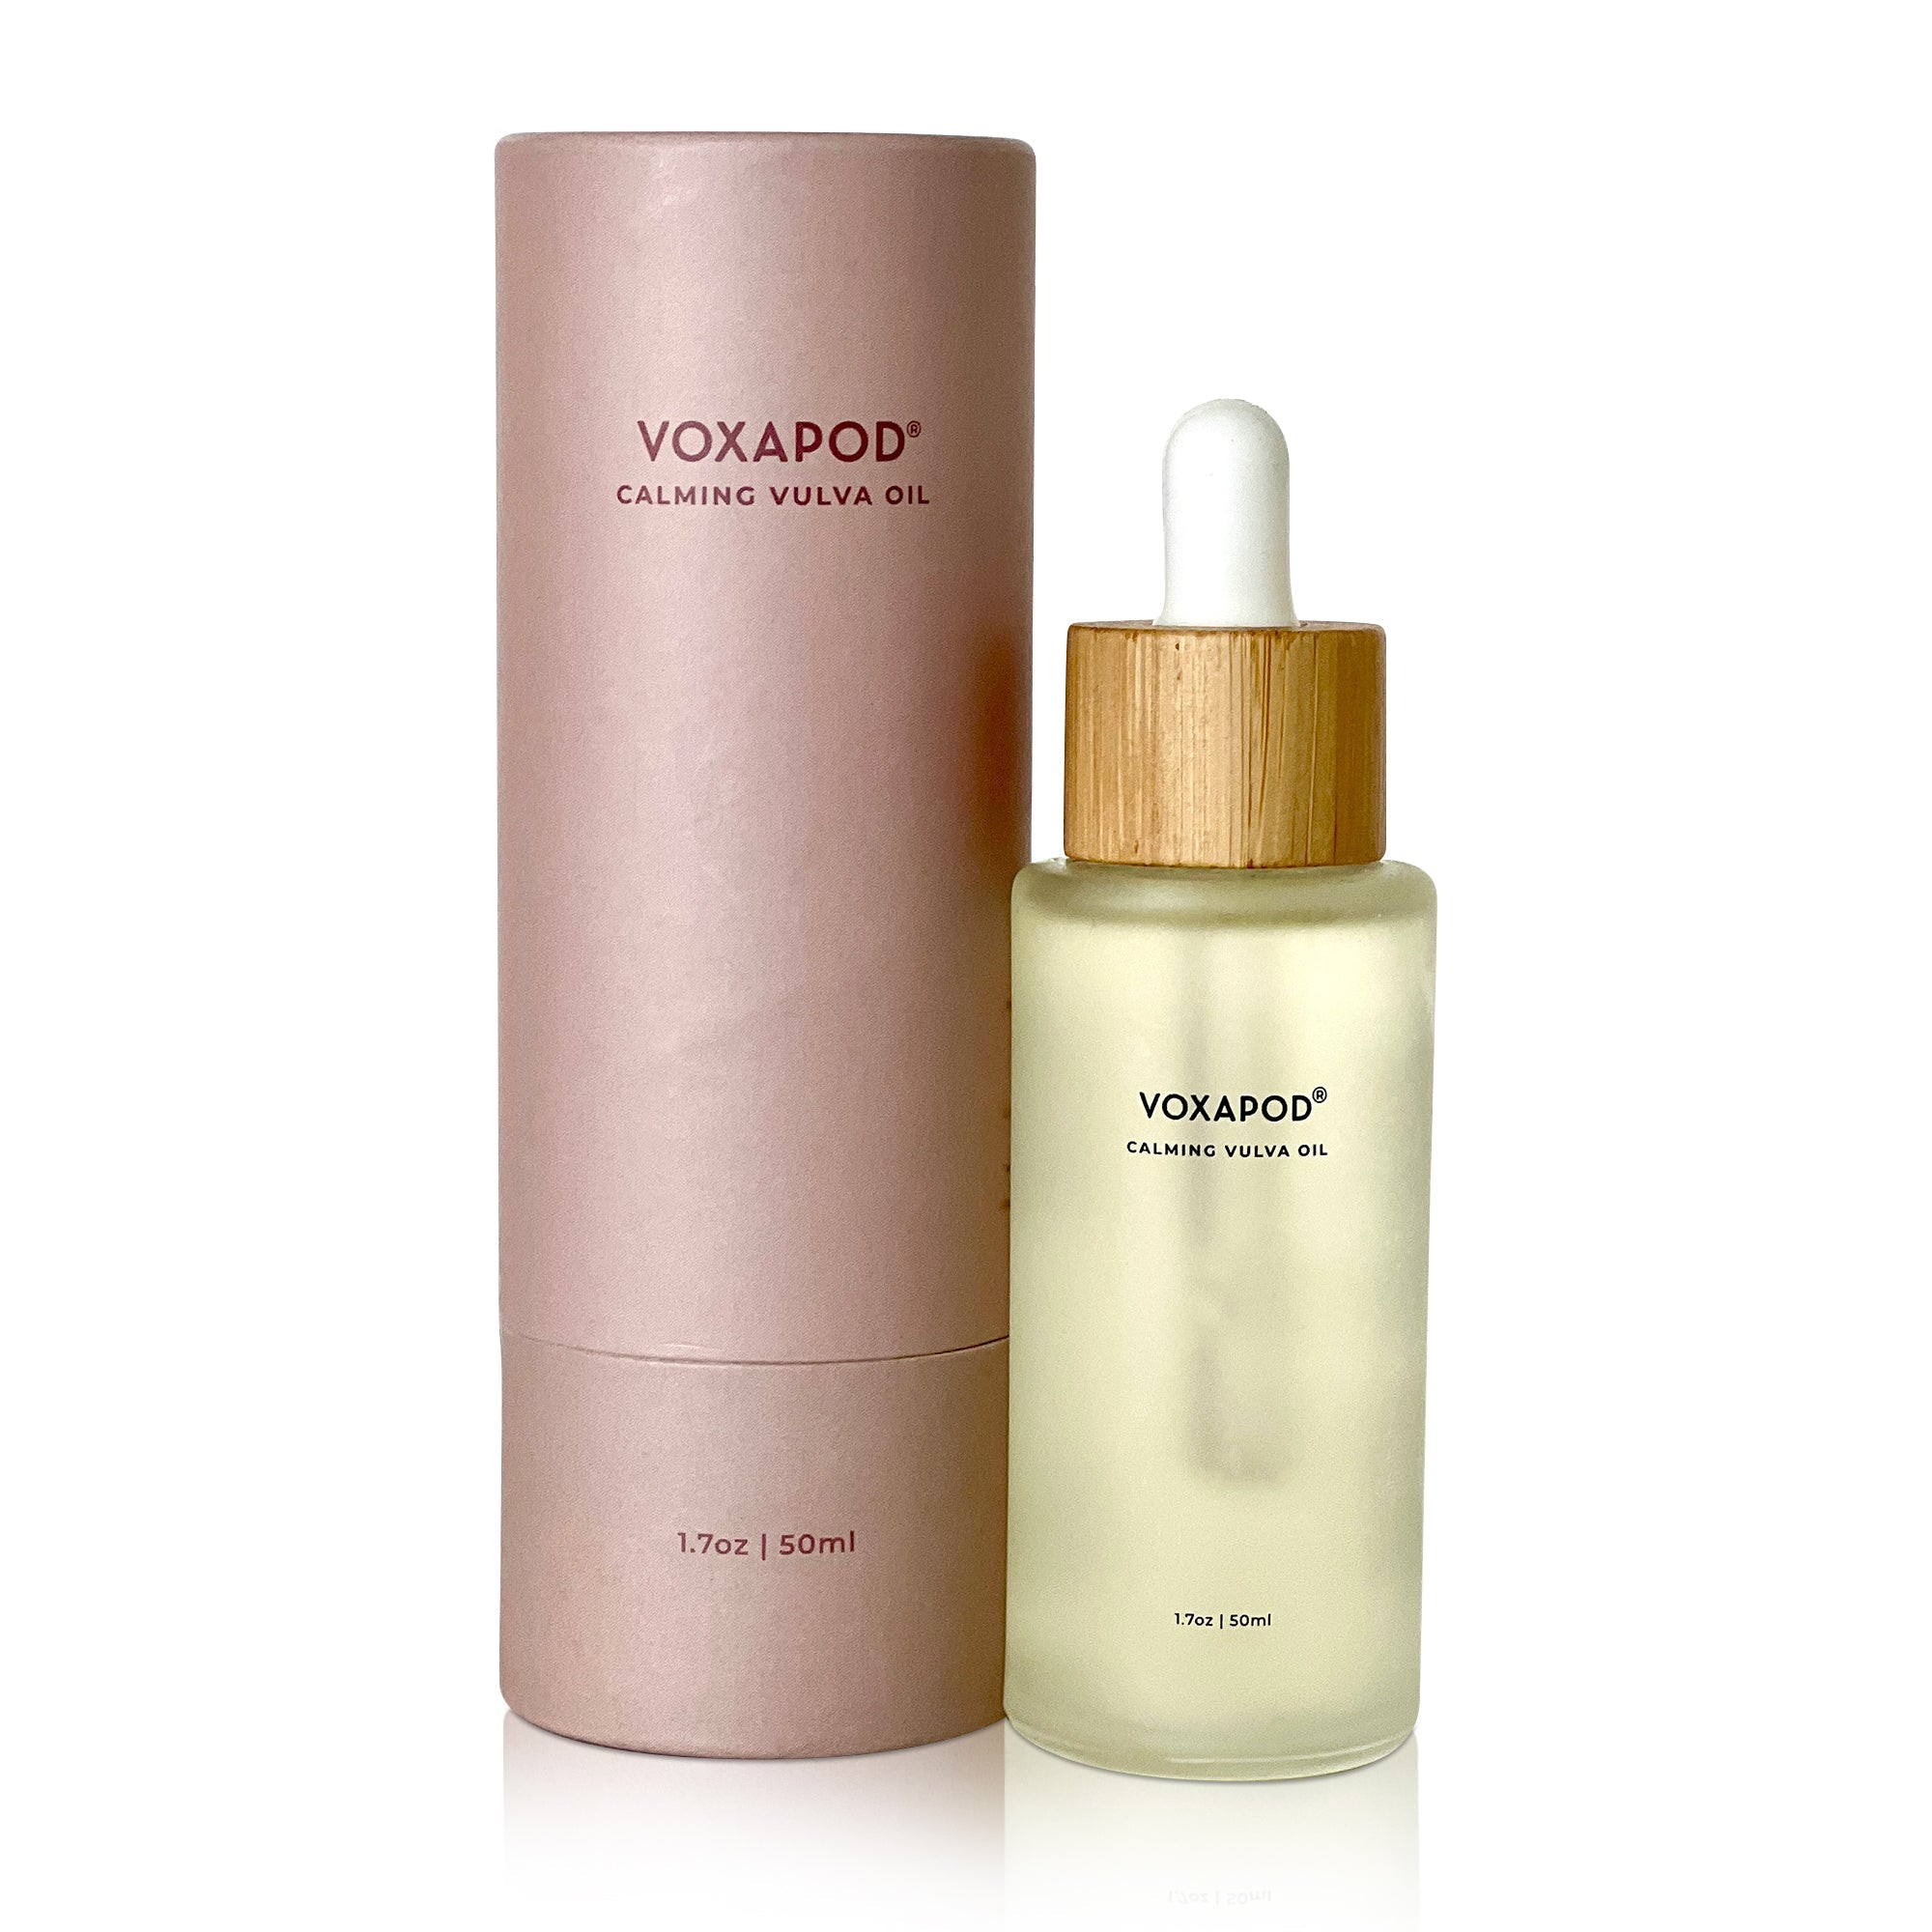 Calming Vulva Oil - VOXAPOD® soft reusable medical grade silicone fda approved period cup